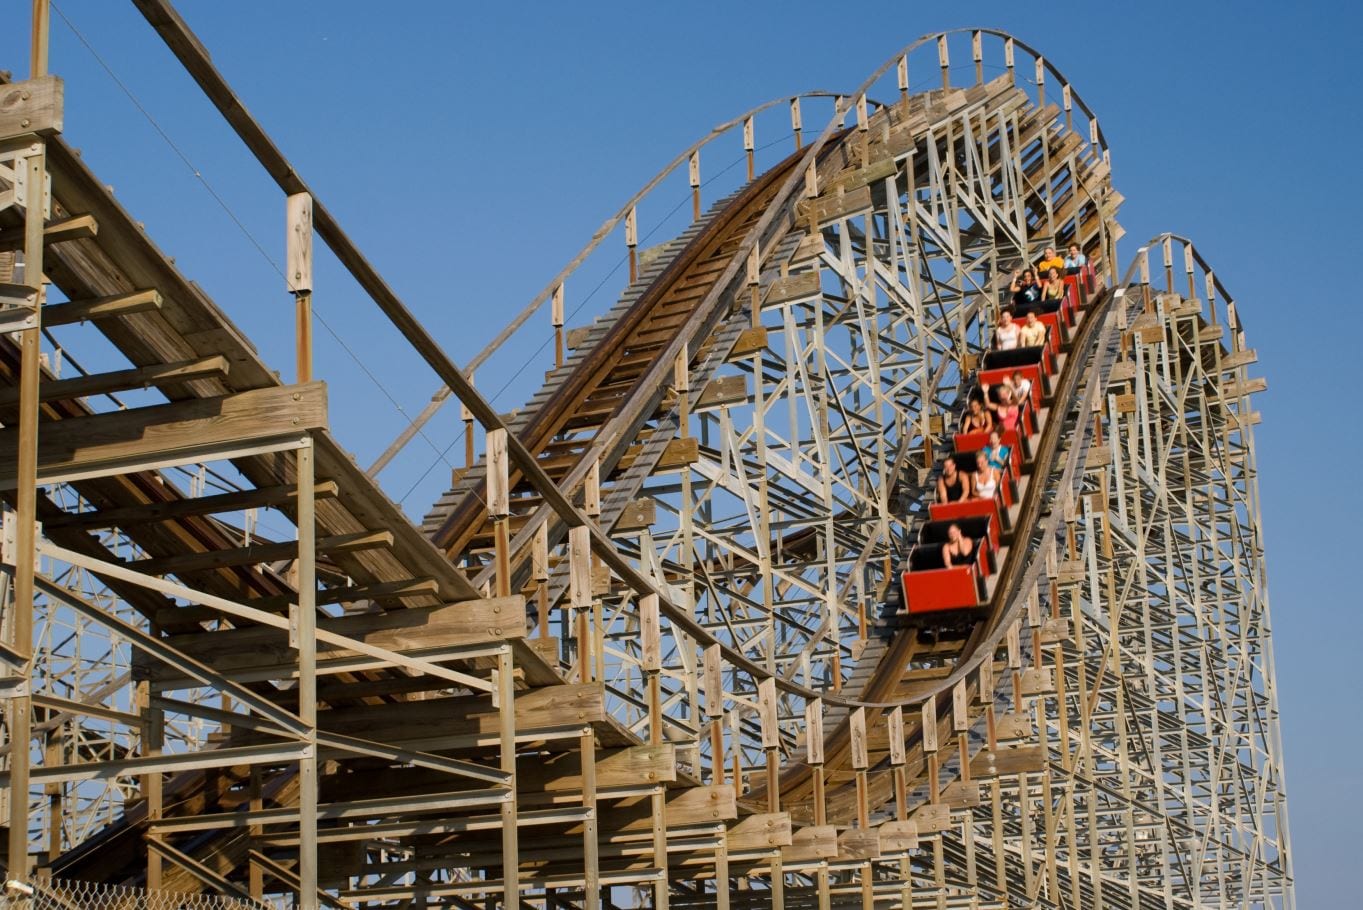 Wooden Rollercoaster